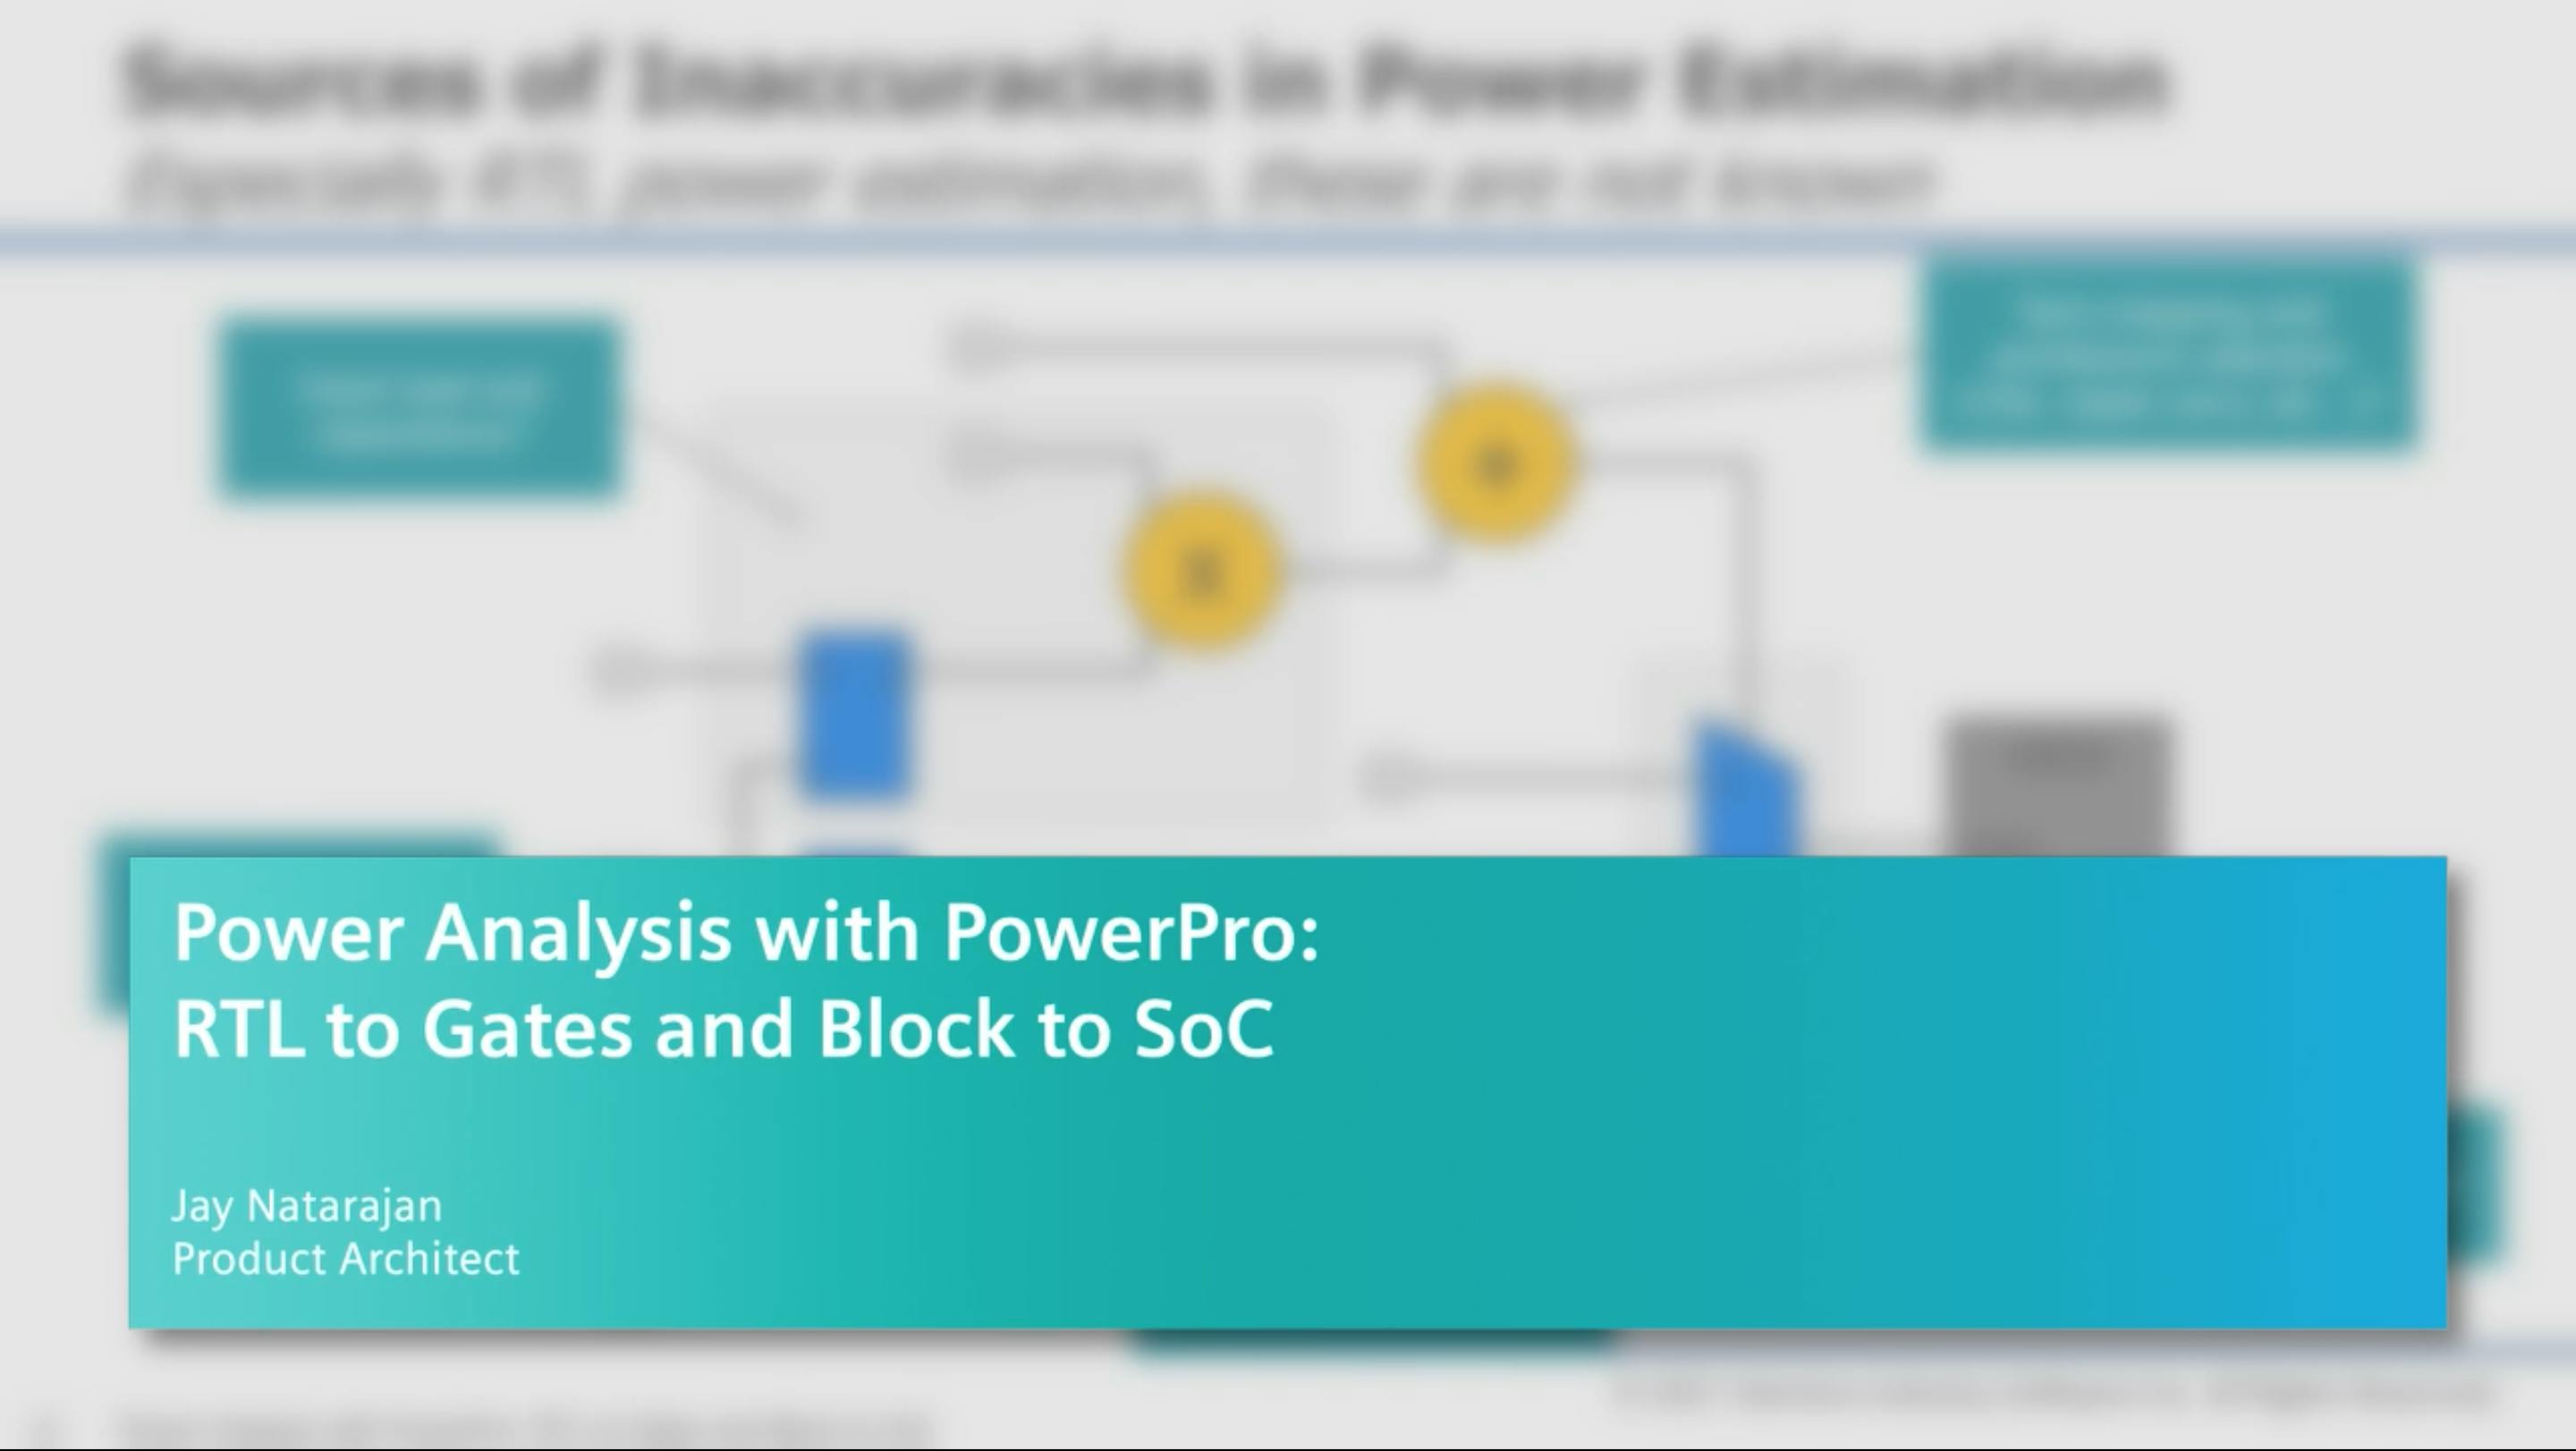 Power Analysis with PowerPro: RTL to Gates and Block to SoC